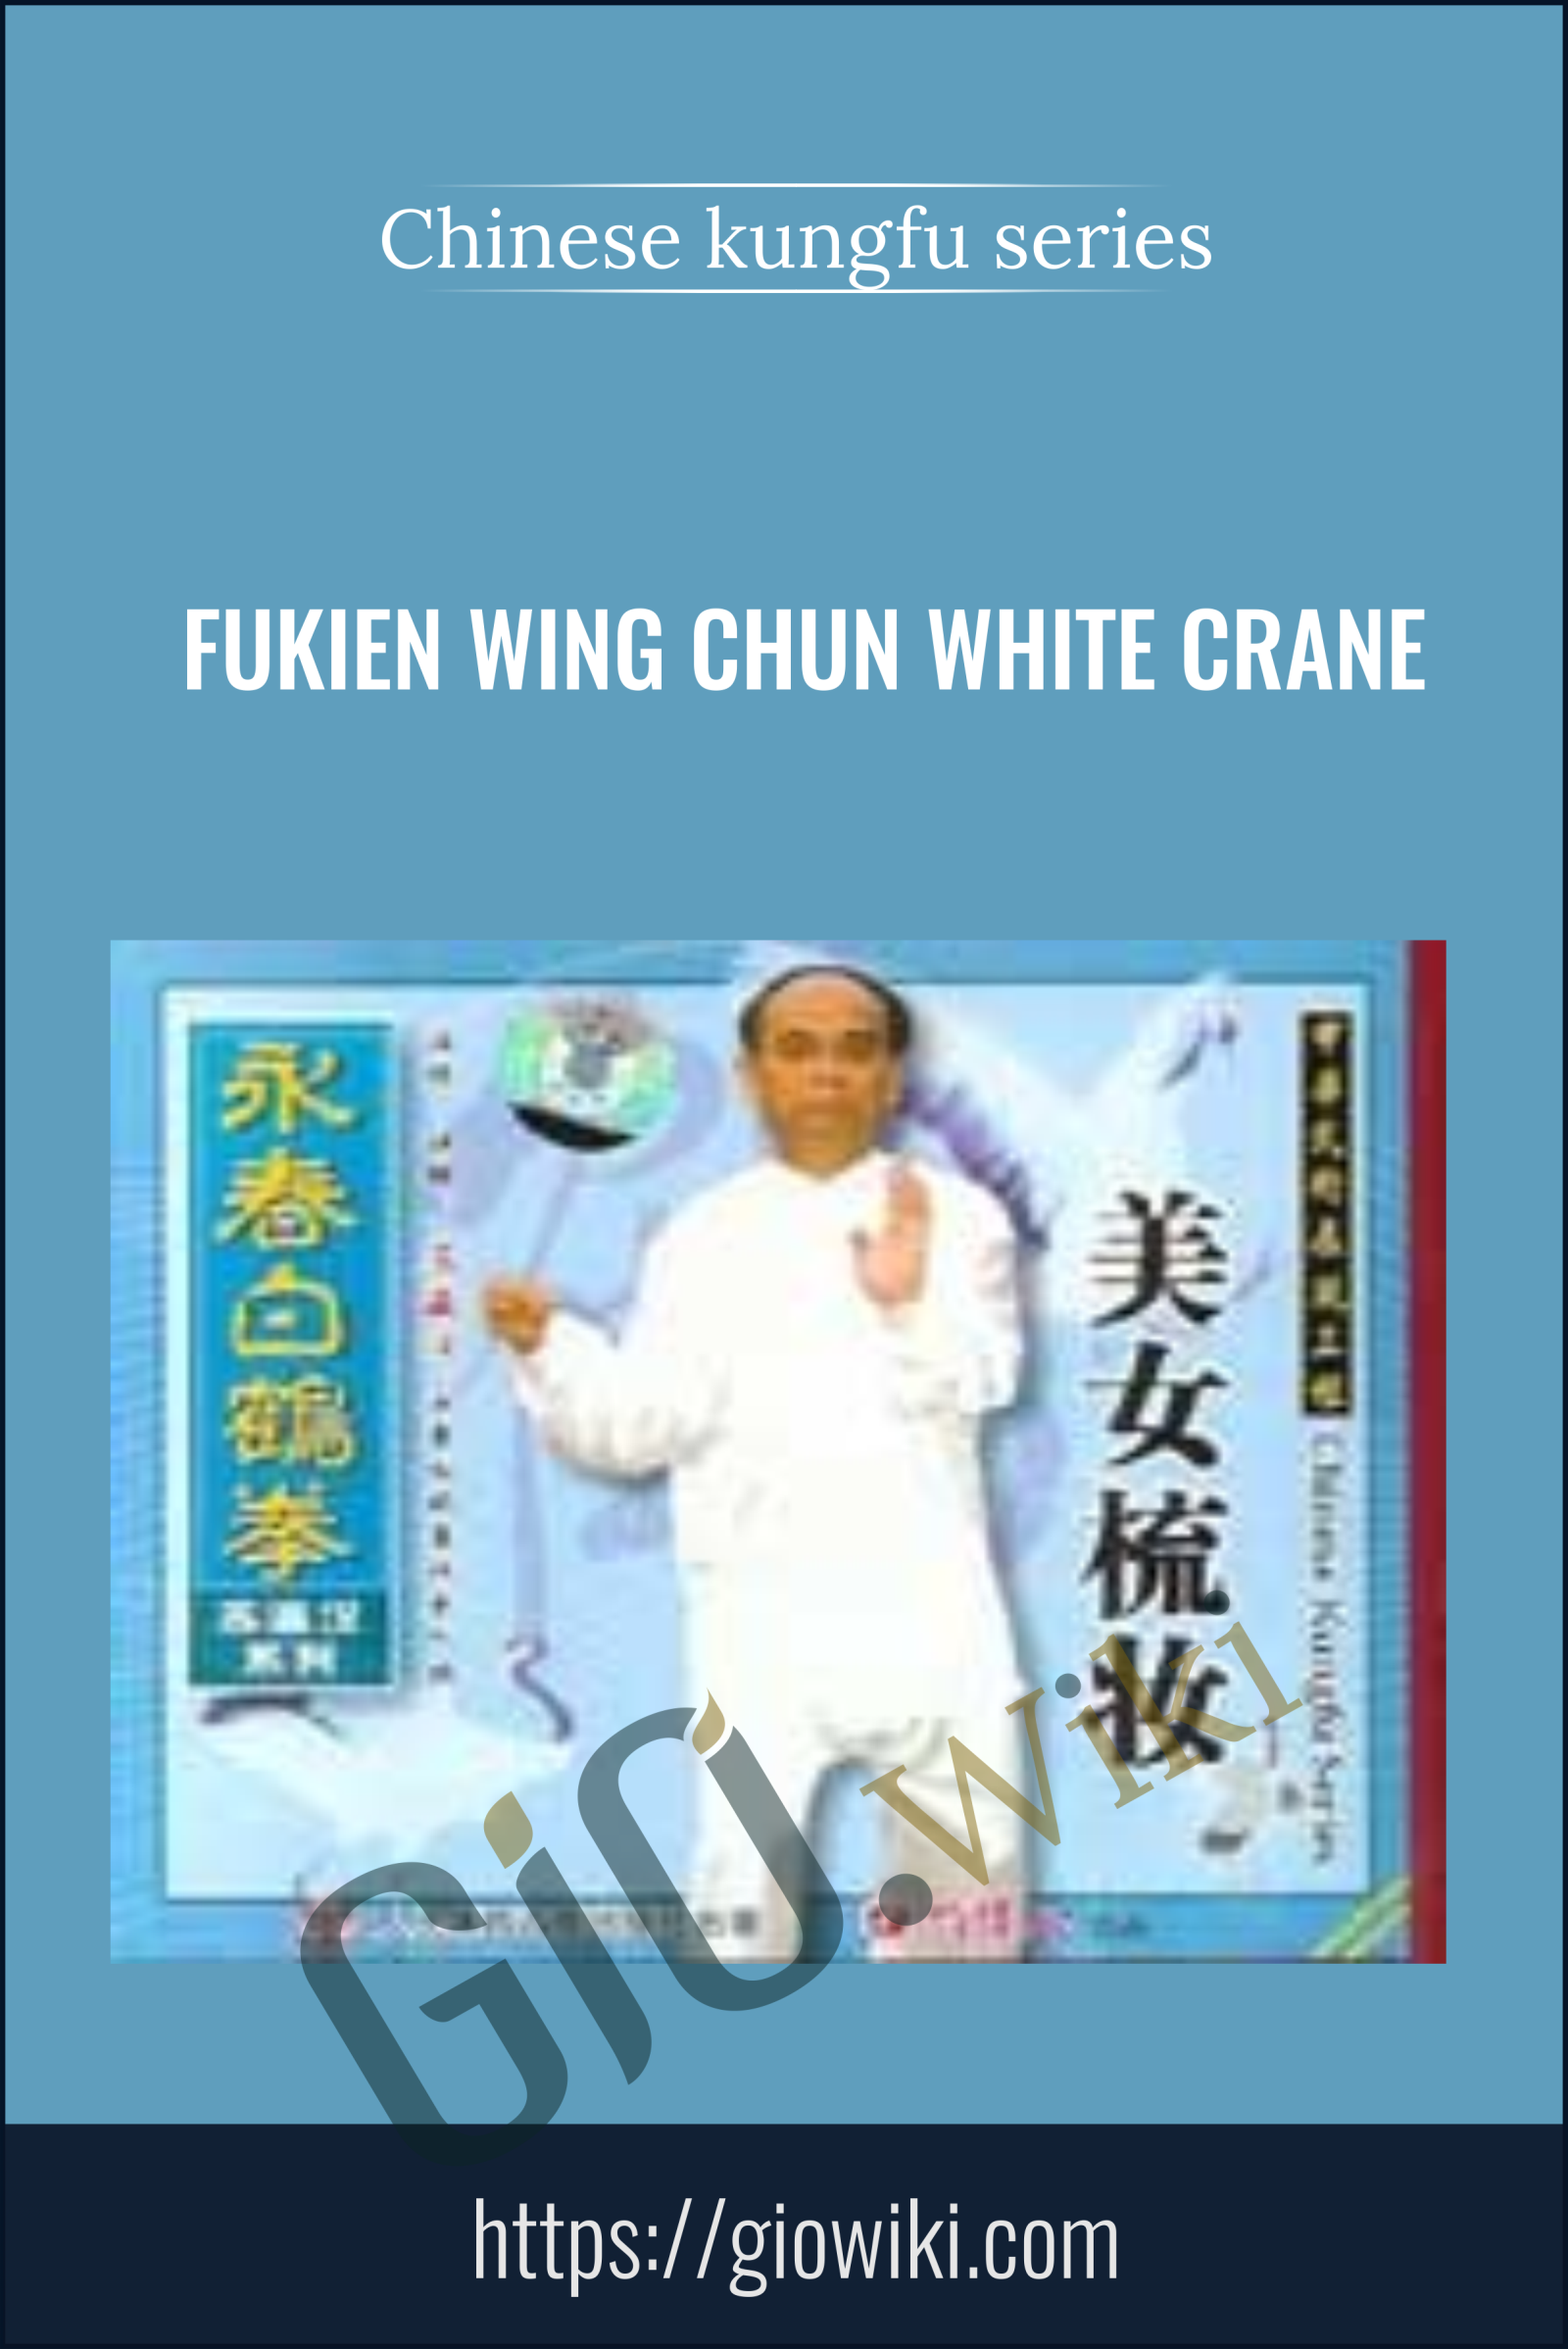 Fukien Wing Chun White Crane - Chinese kungfu series